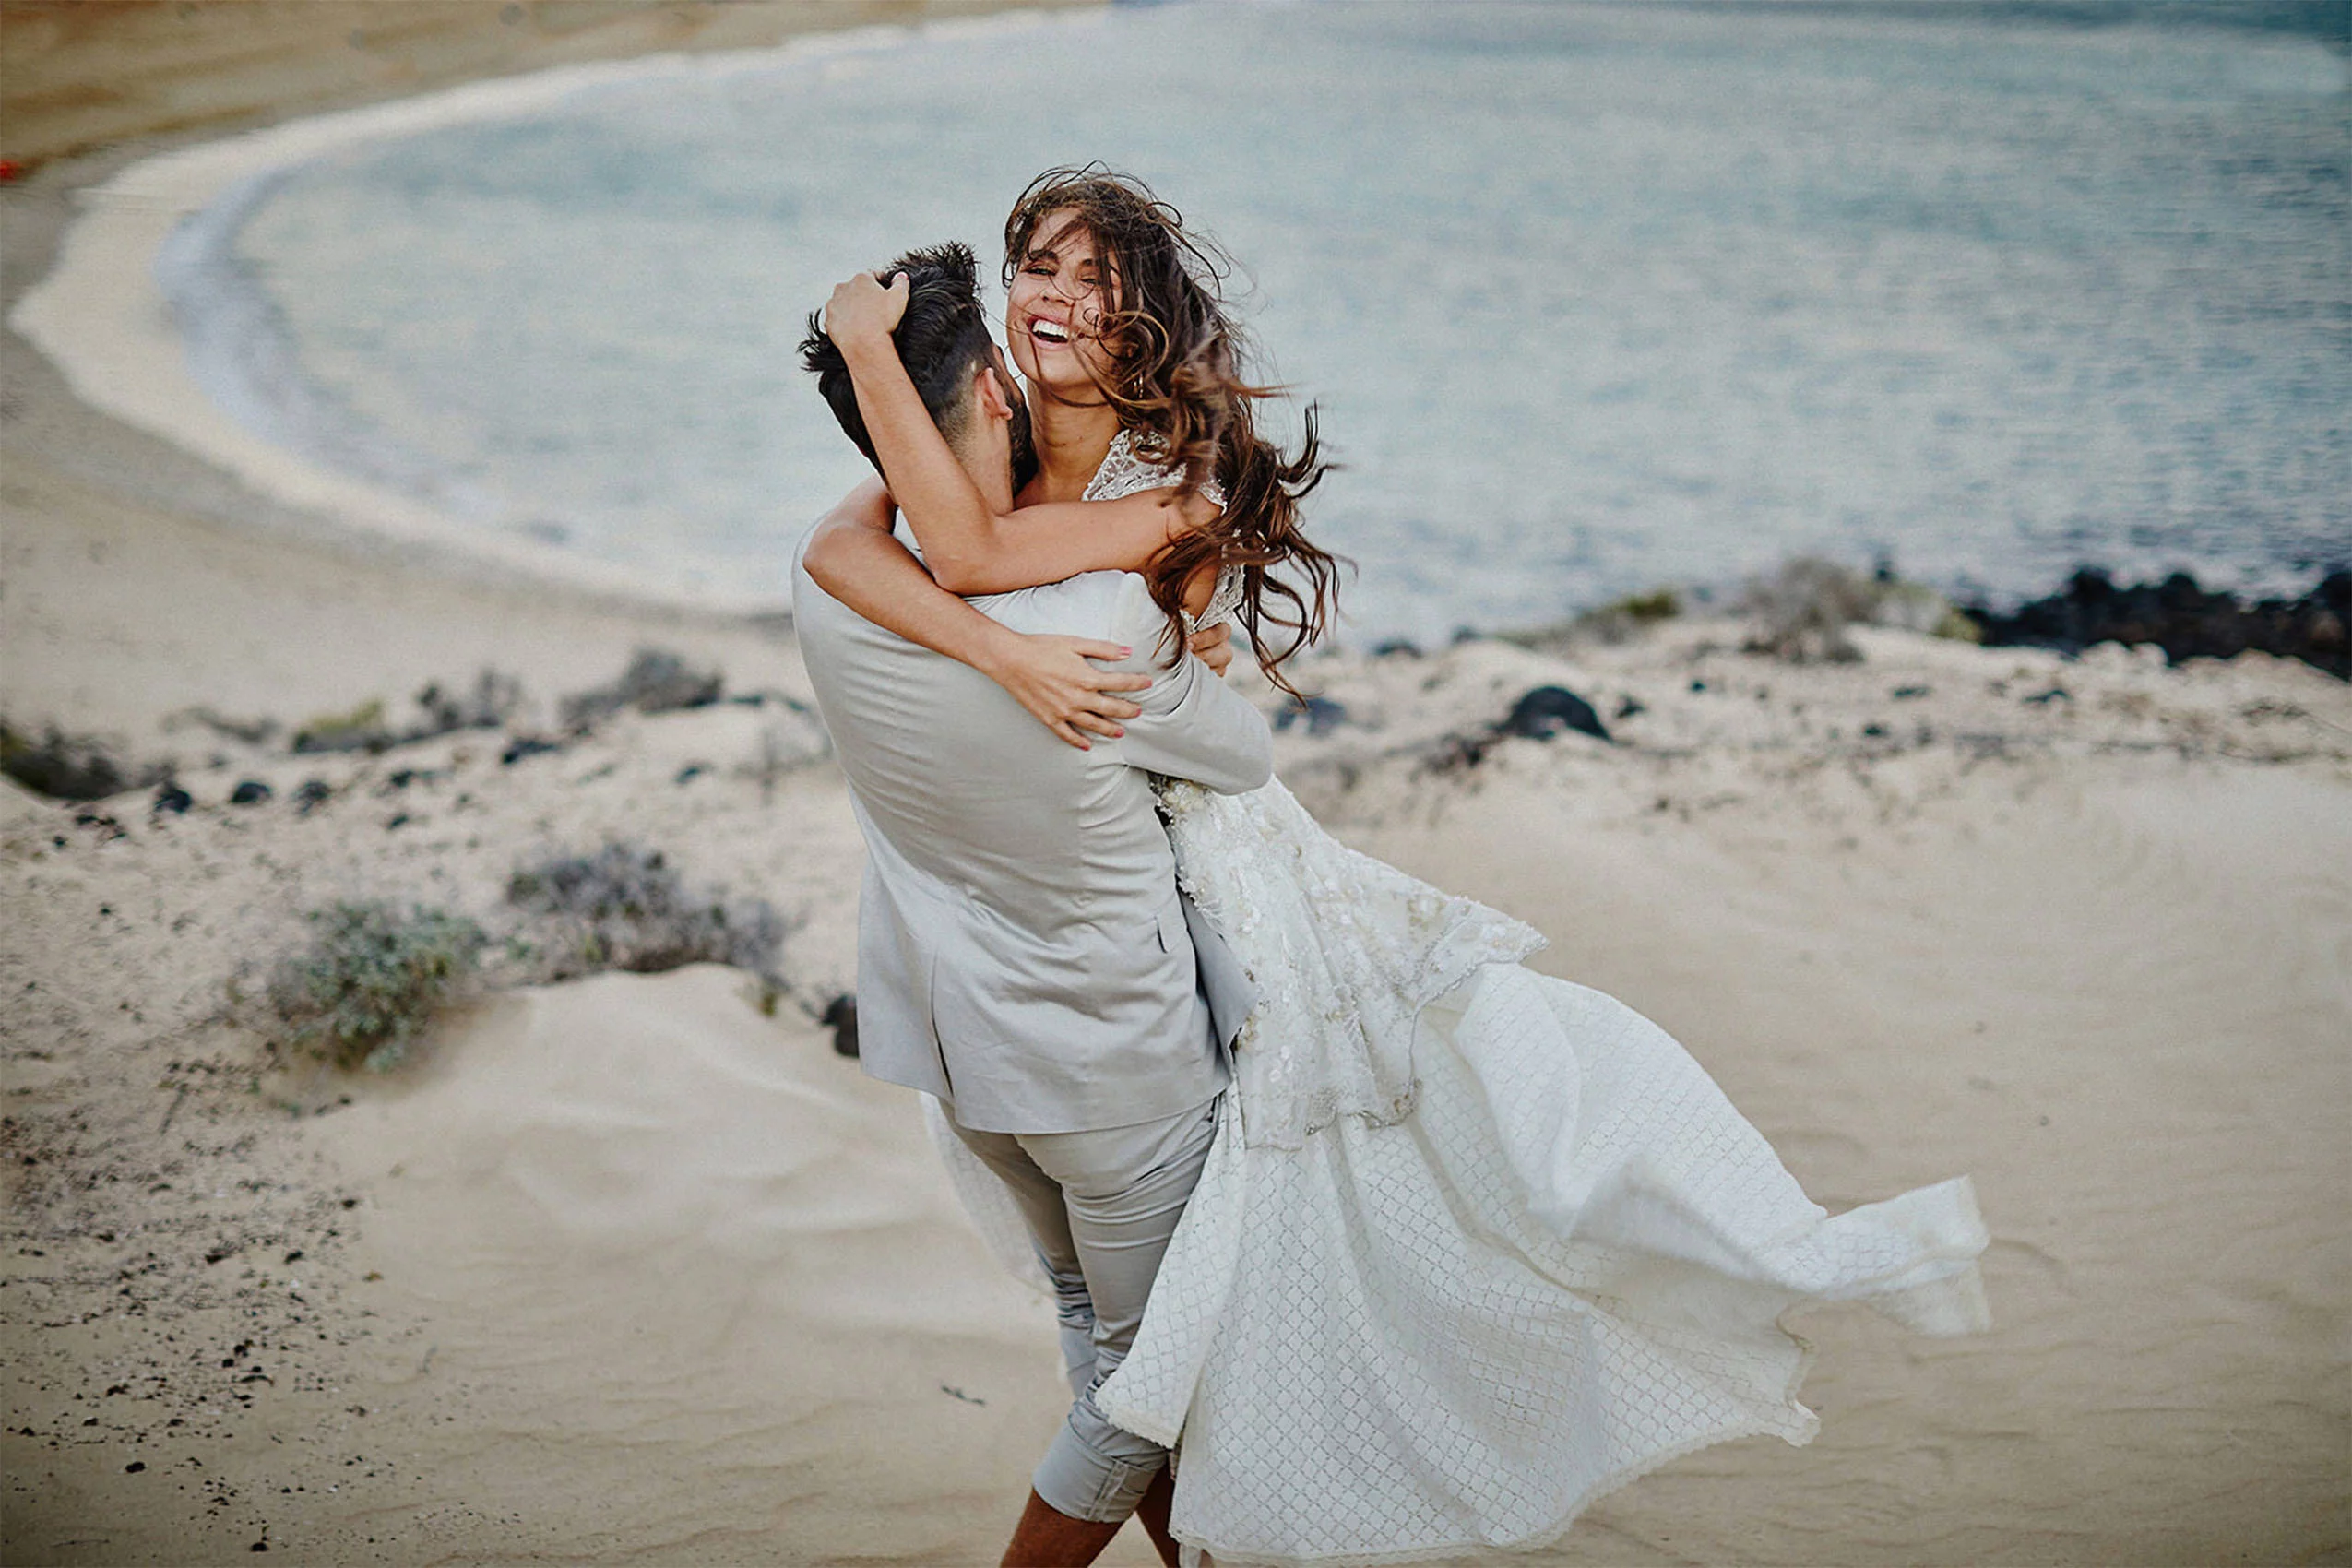 Retro Wedding Dress Ideas | World's Best Wedding Photography